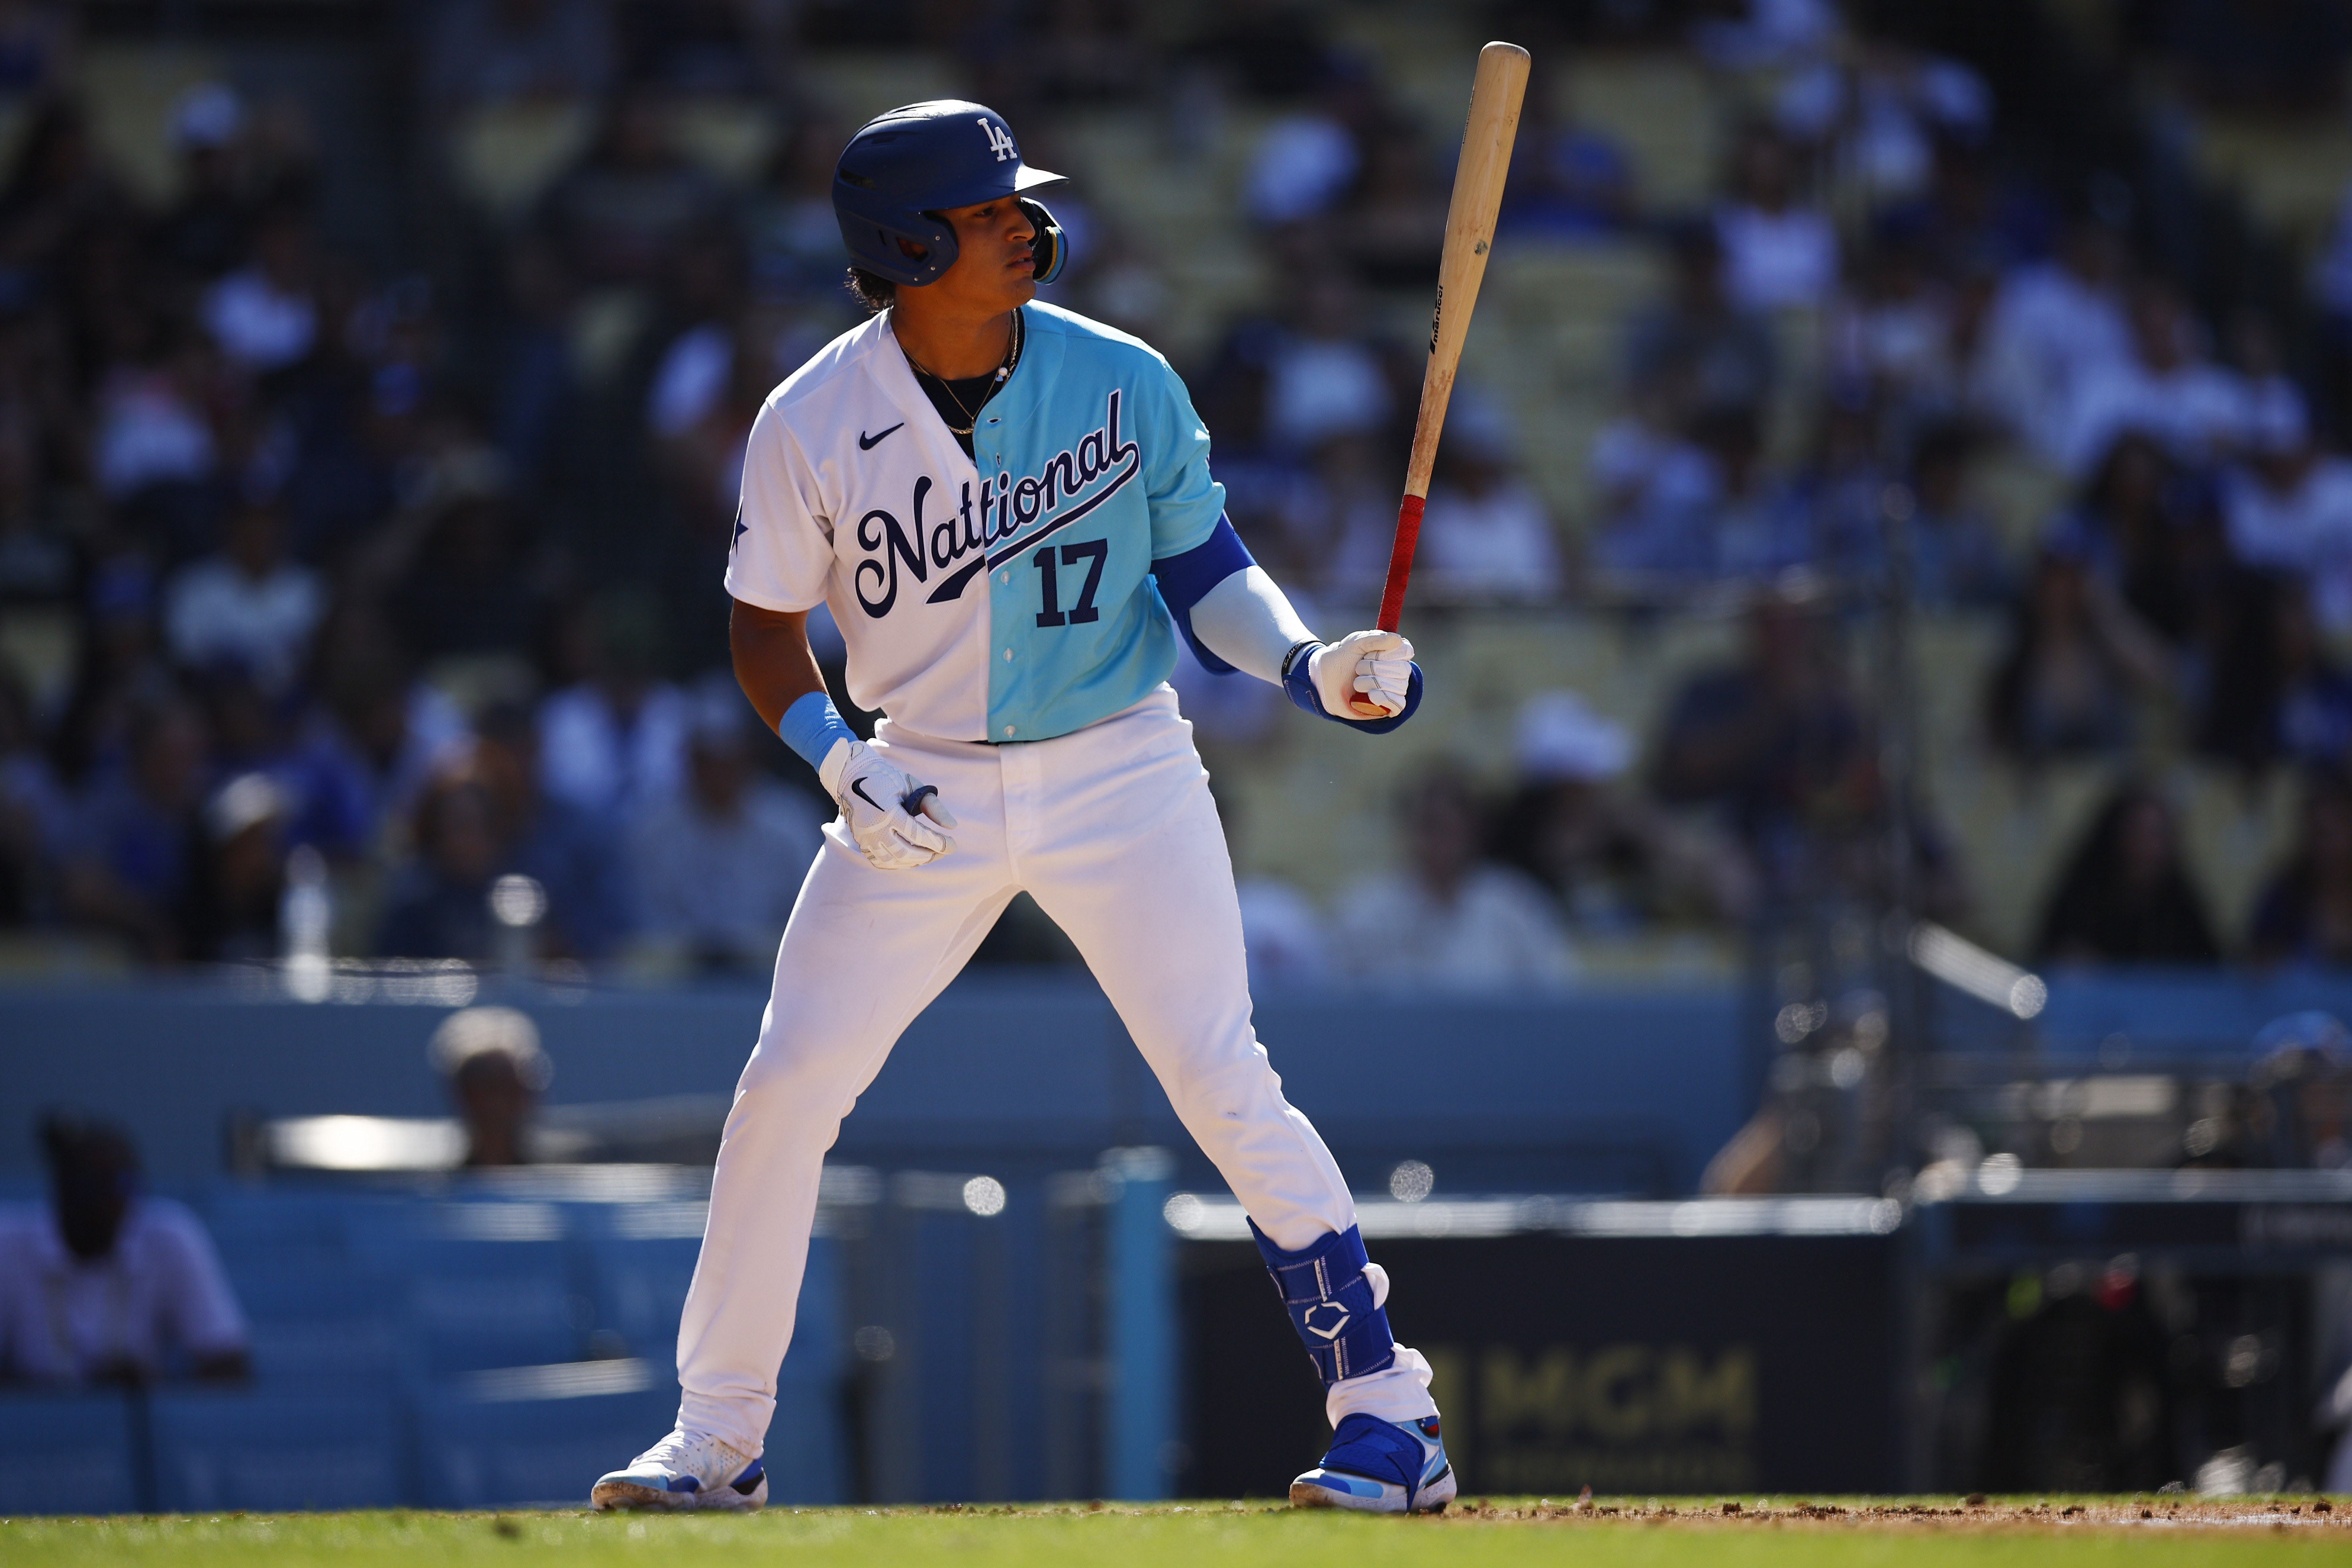 Dodgers prospects: Diego Cartaya, Bobby Miller top Baseball